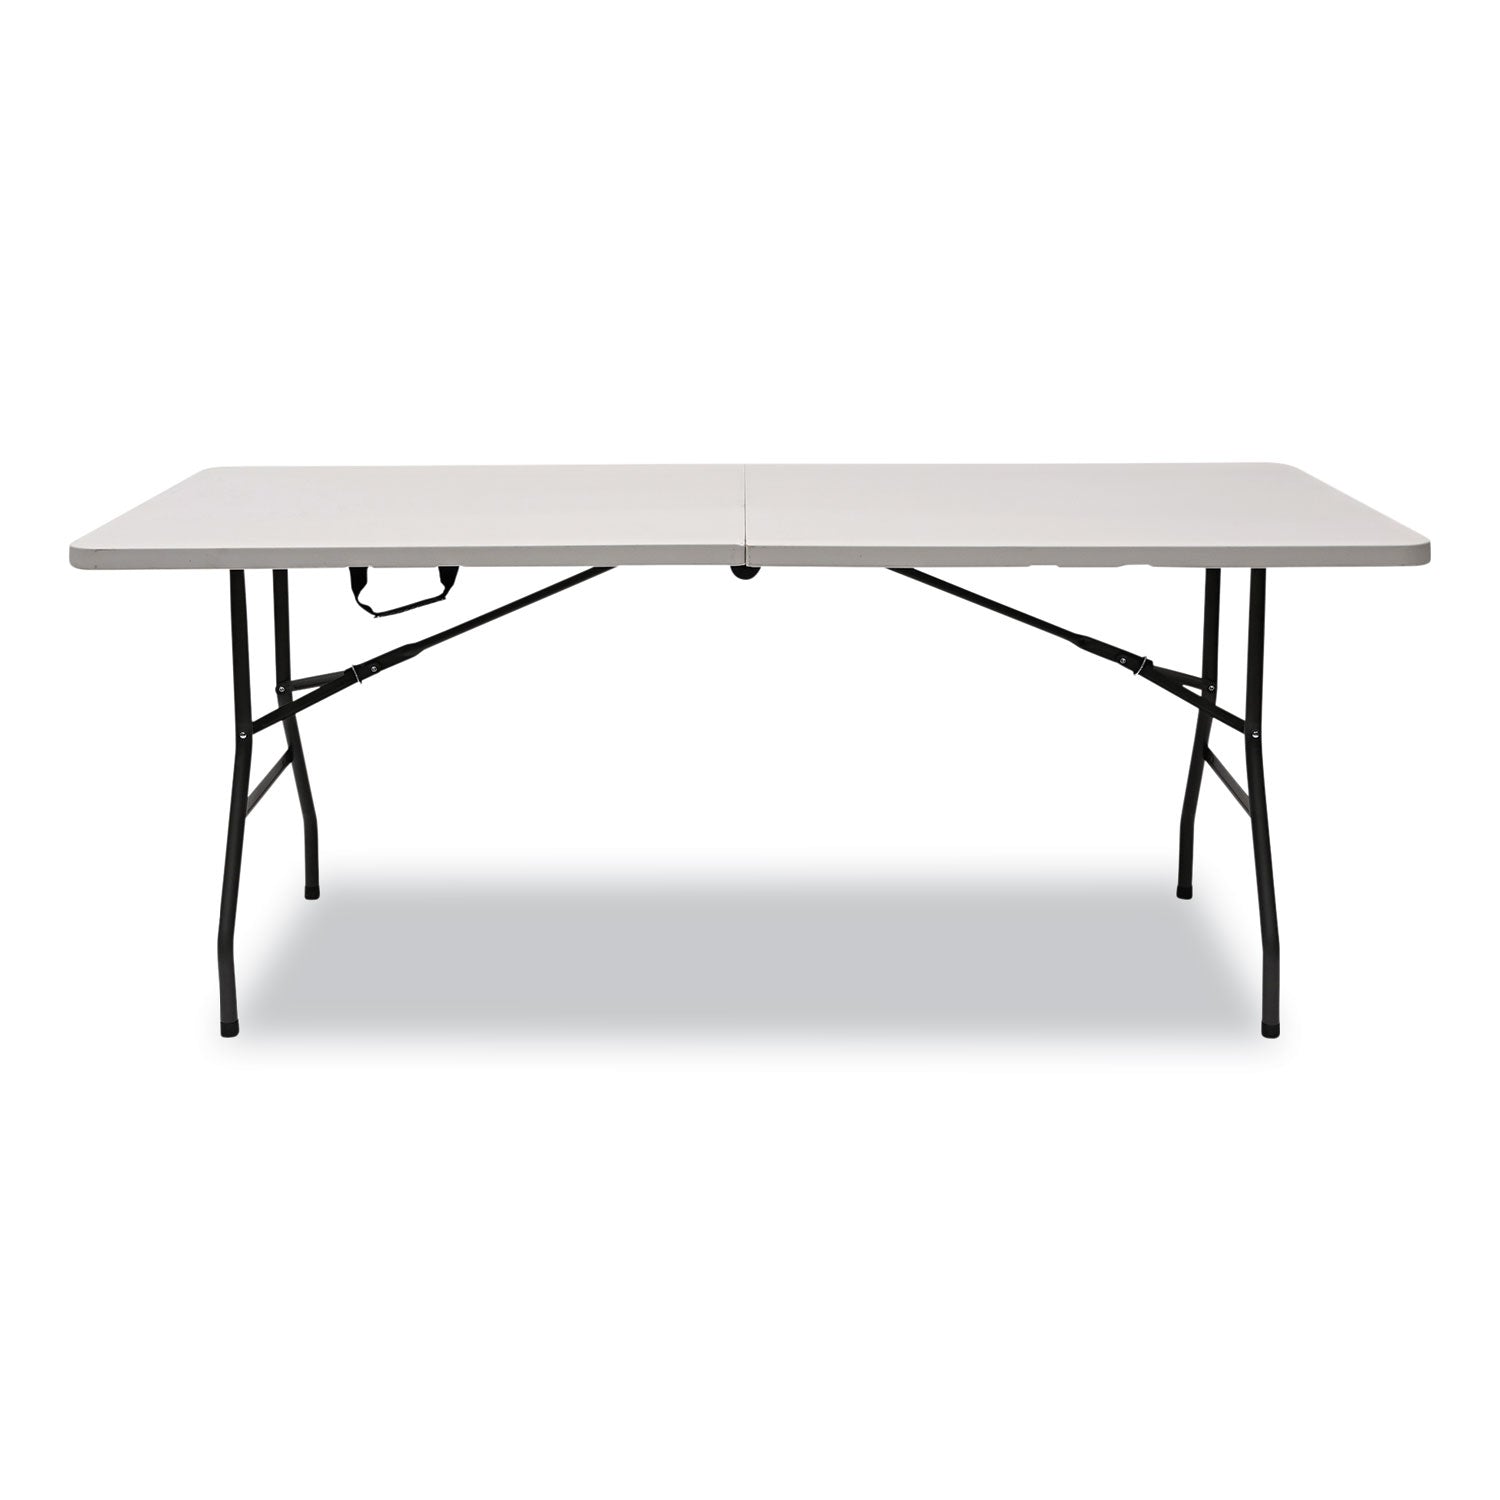 bifold-resin-folding-table-rectangular-709-x-291-x-30-white-granite-top-gray-base-legs-2-pack_ice61263 - 2